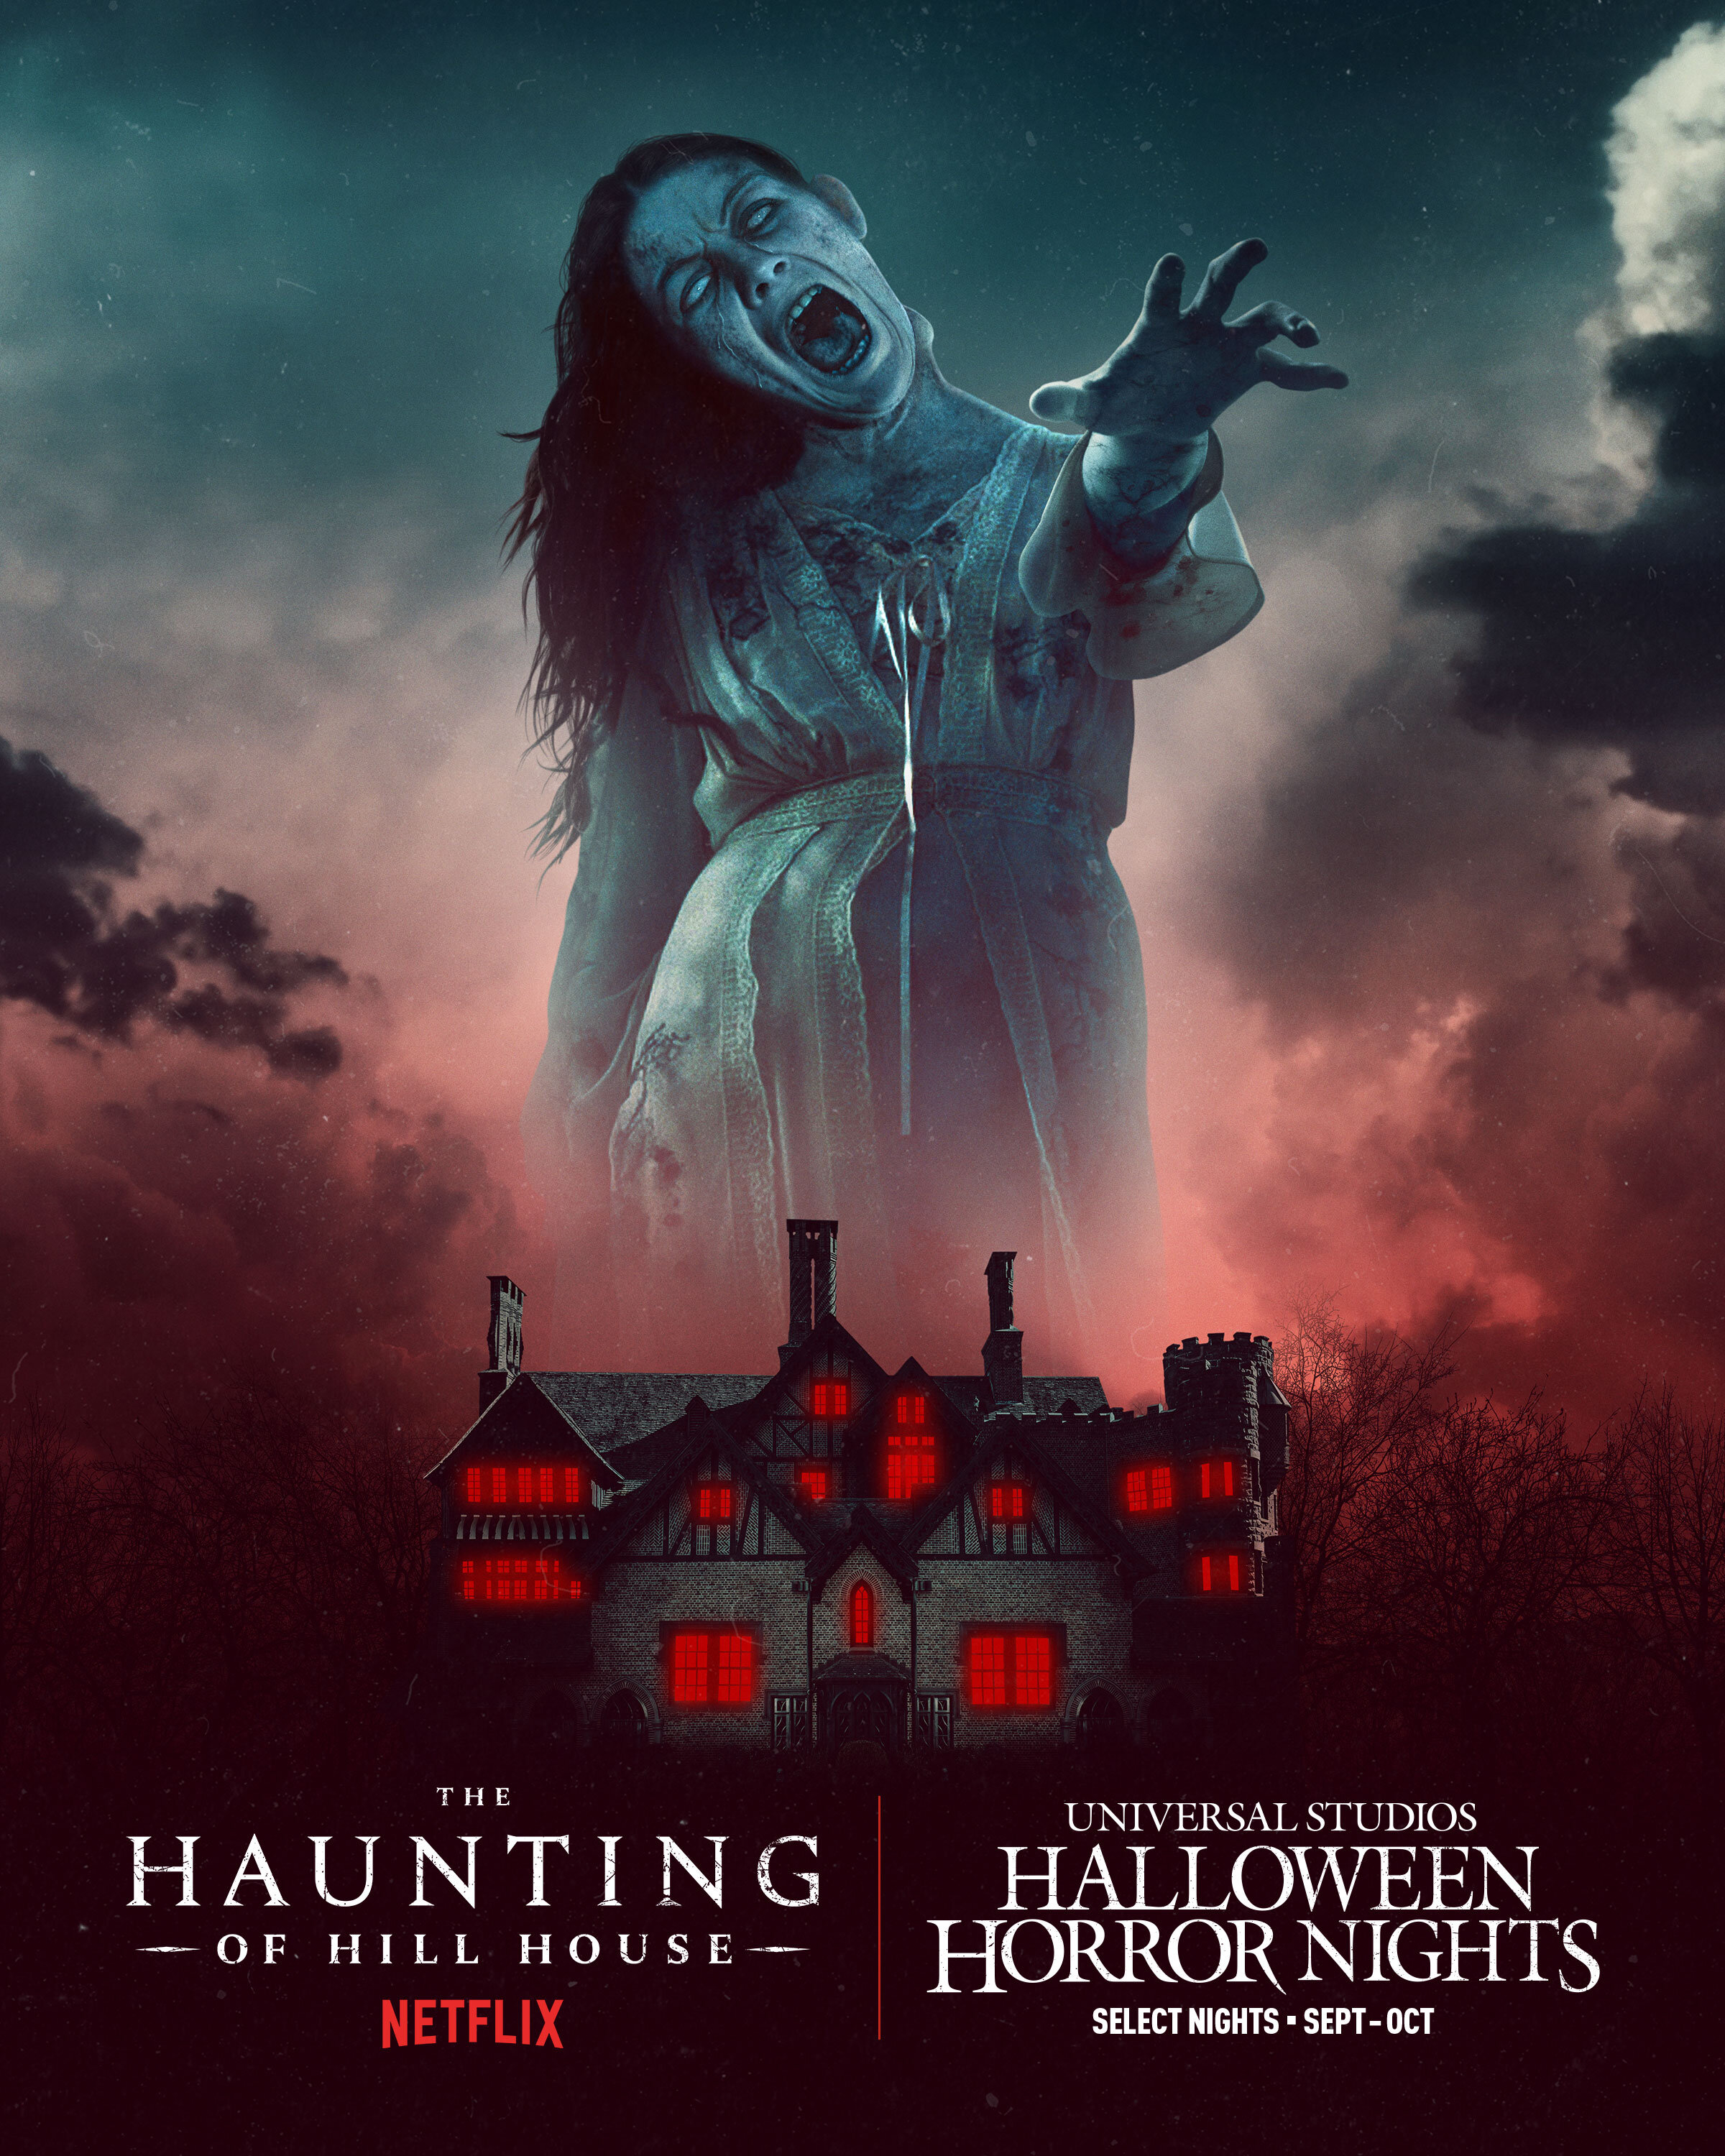 Los Angeles & Beyond: Halloween Guide 2021 - Haunts & Horror!